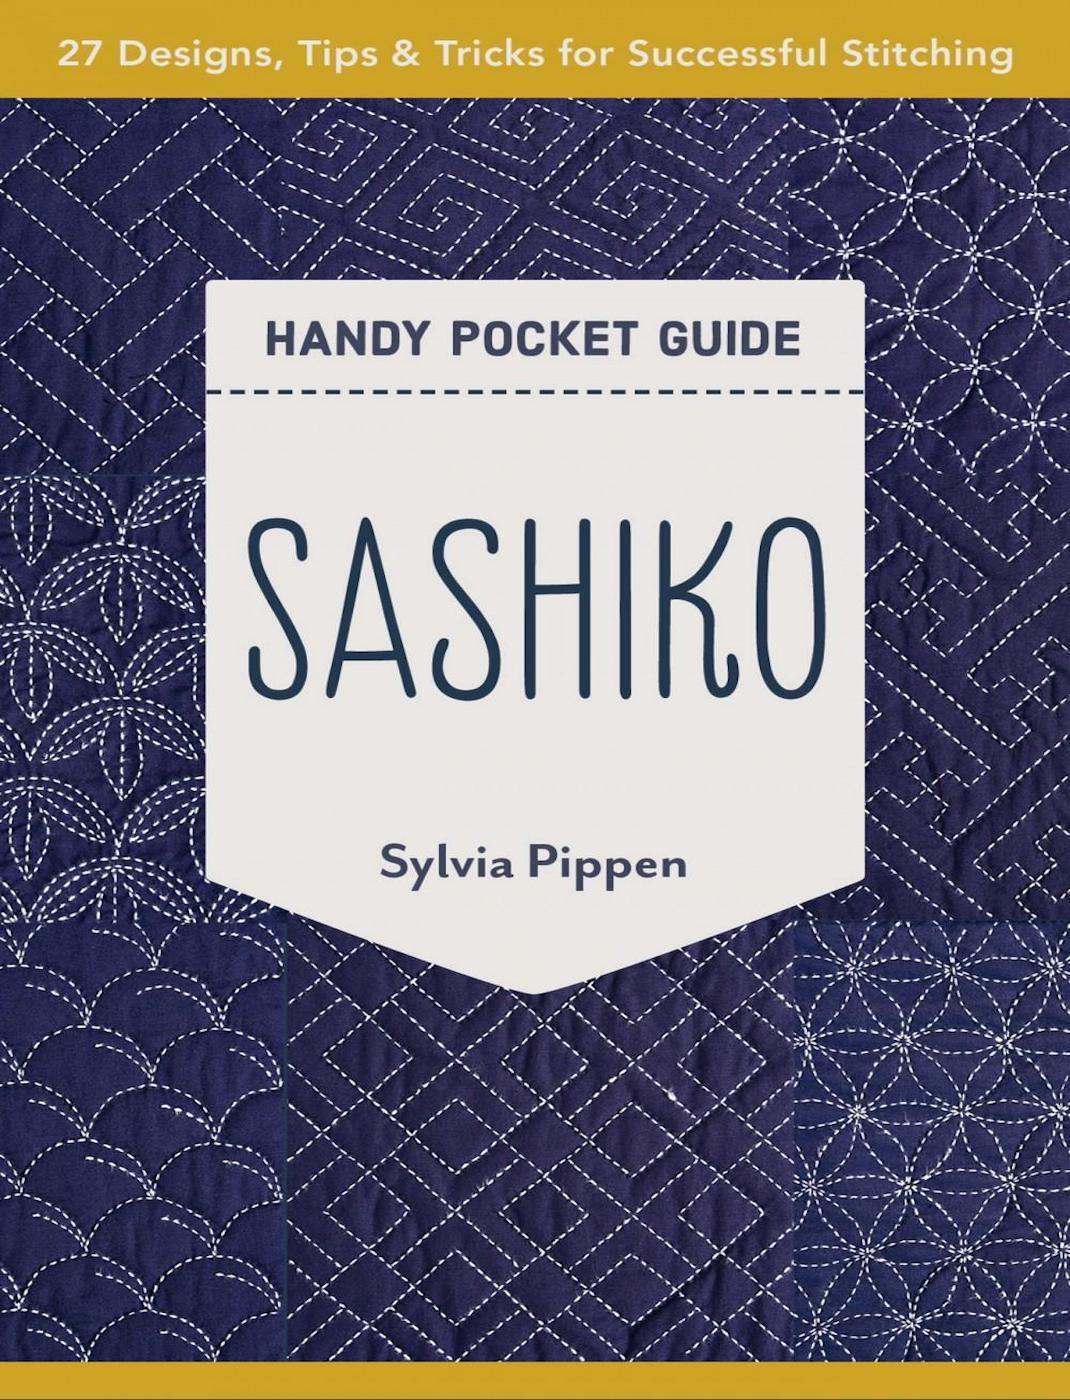 Sashiko Handy Pocket Guide - Quilted Strait